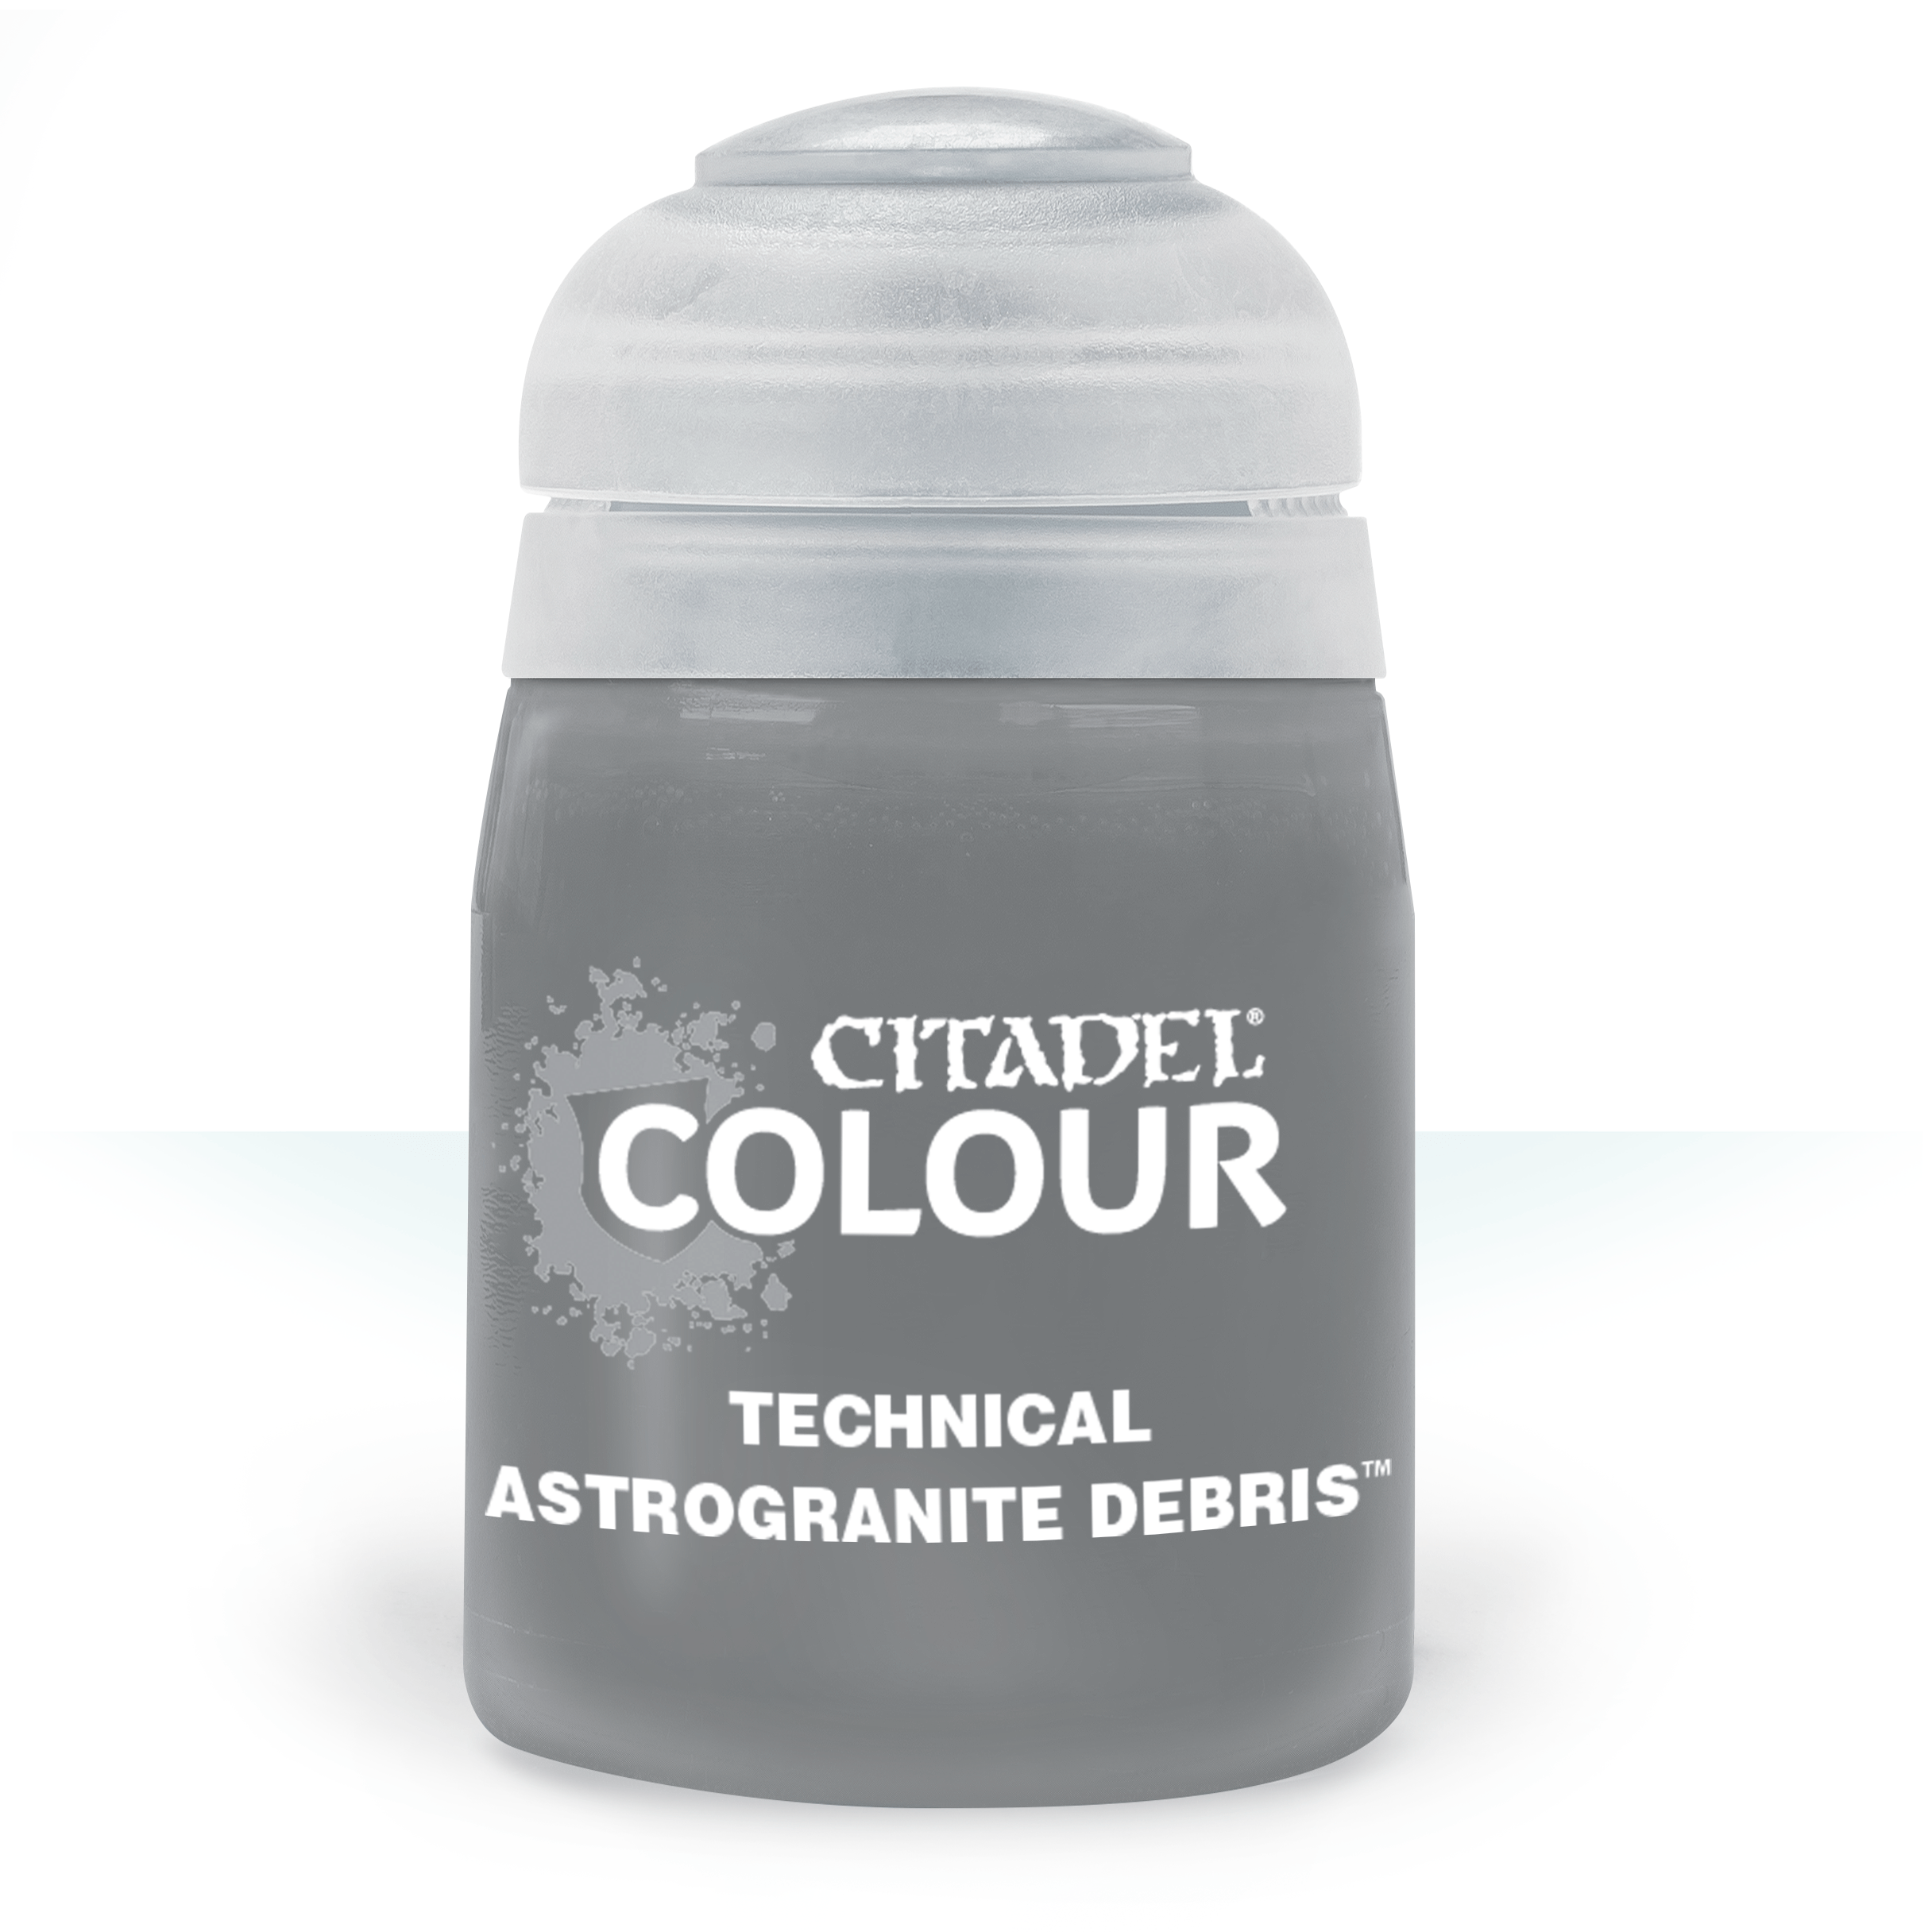 Technical Astrogranite Debris - Citadel Colour